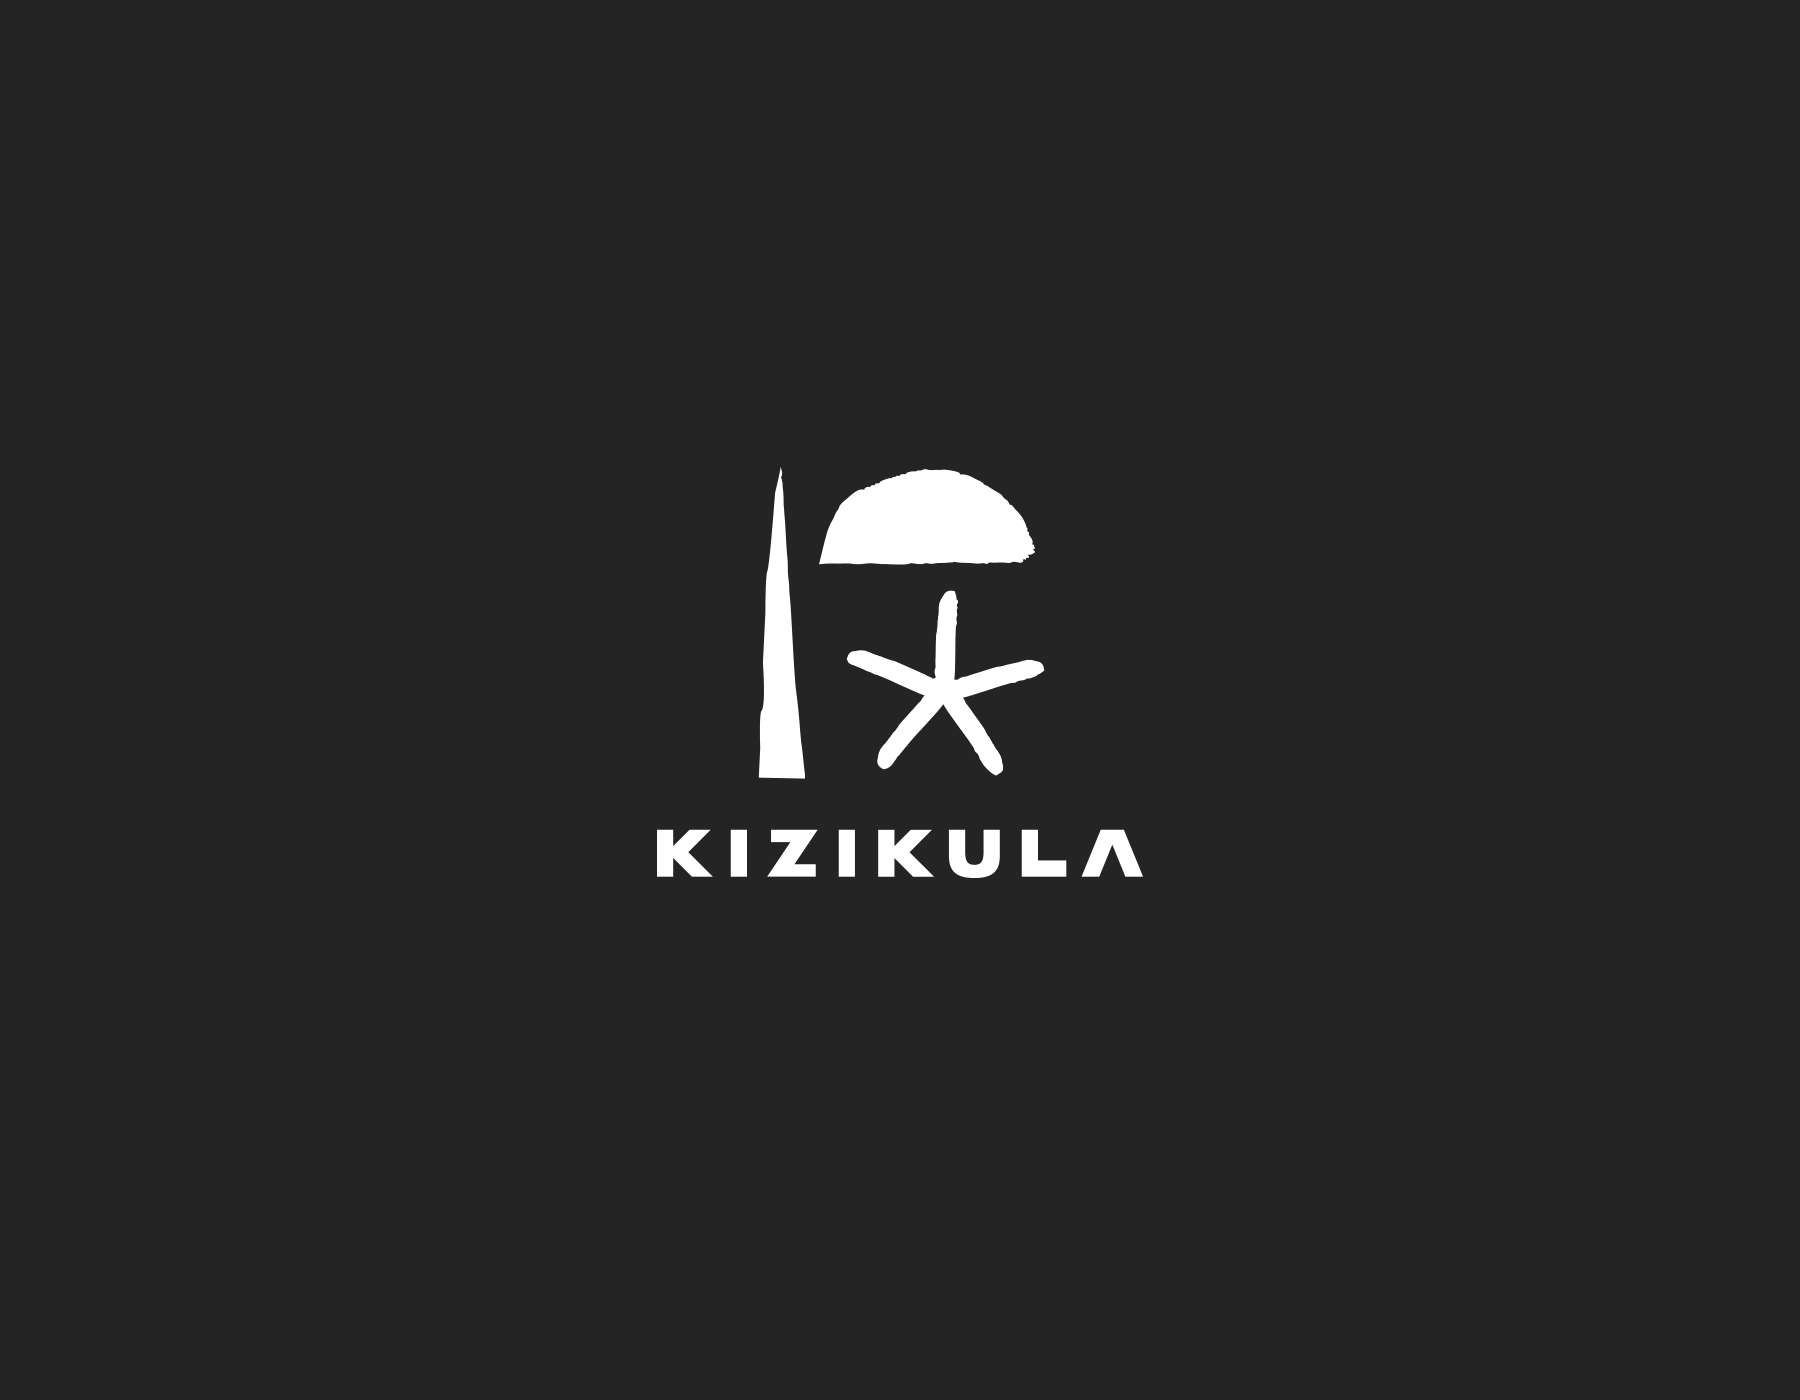 Kizikula identity by Colour Format